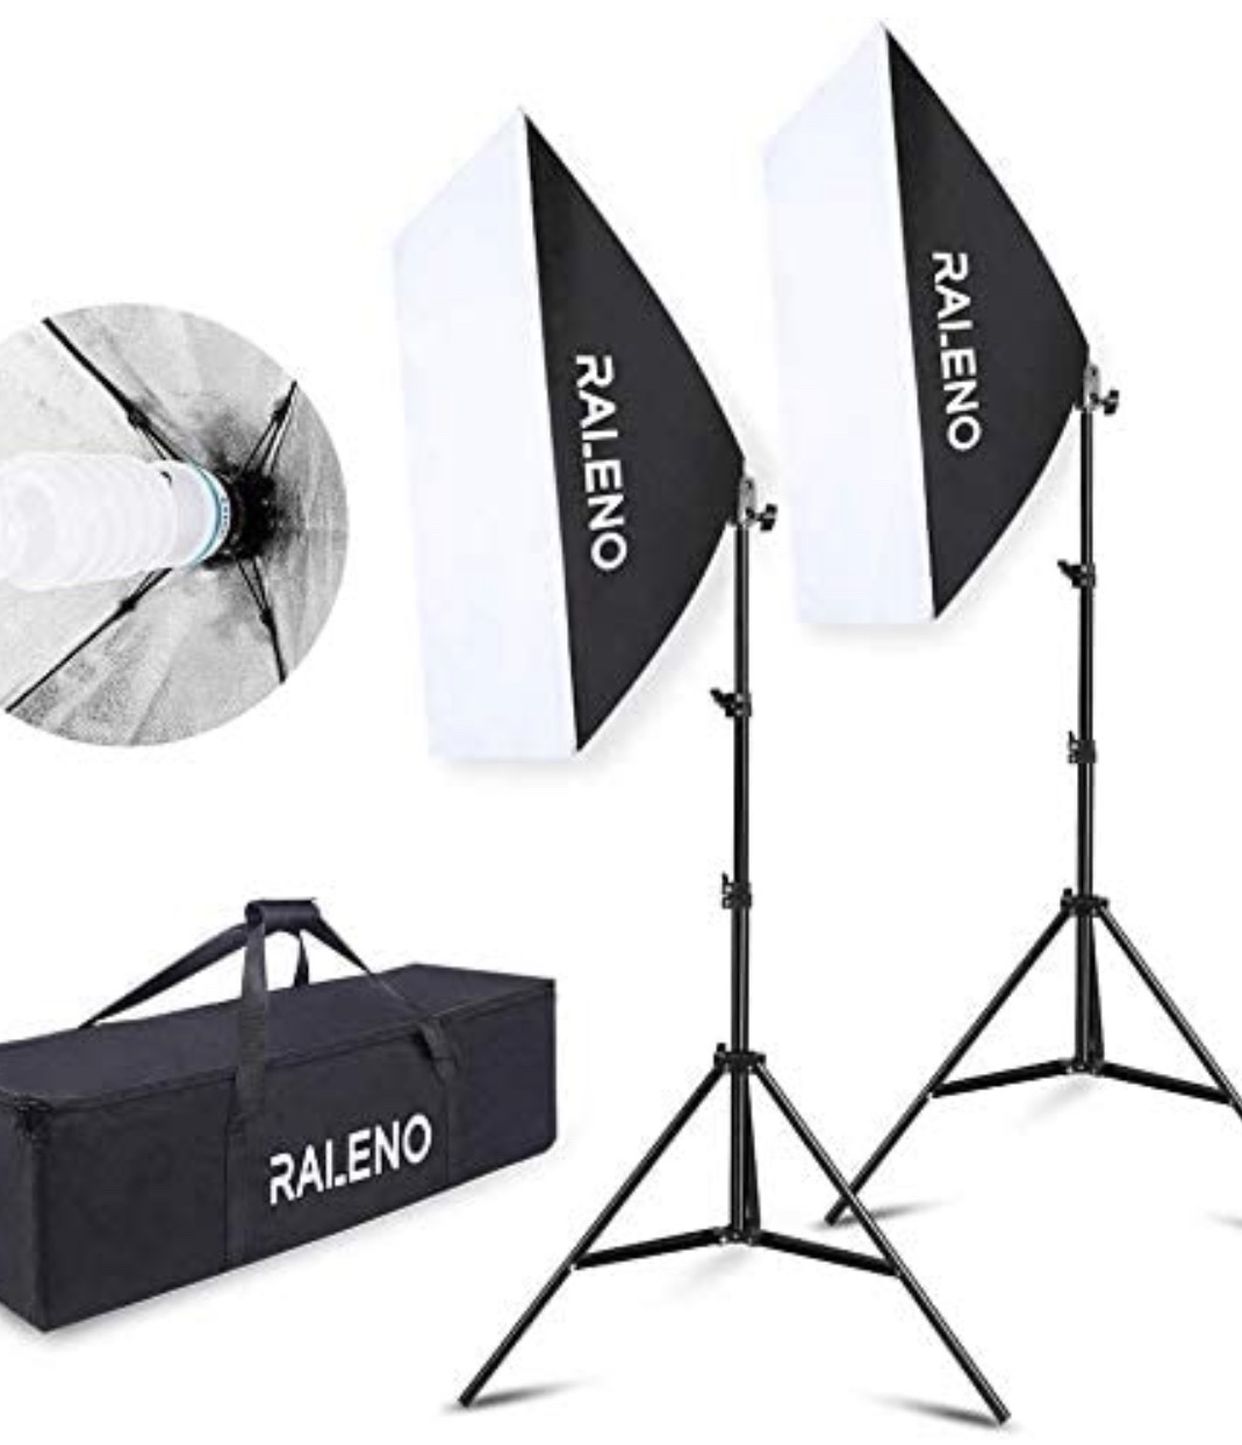 Softbox Photography Lighting Kit 20"X28" Photography Continuous Lighting System Photo Studio Equipment with 2pcs E27 Socket 5500K Bulb Photo Model Por